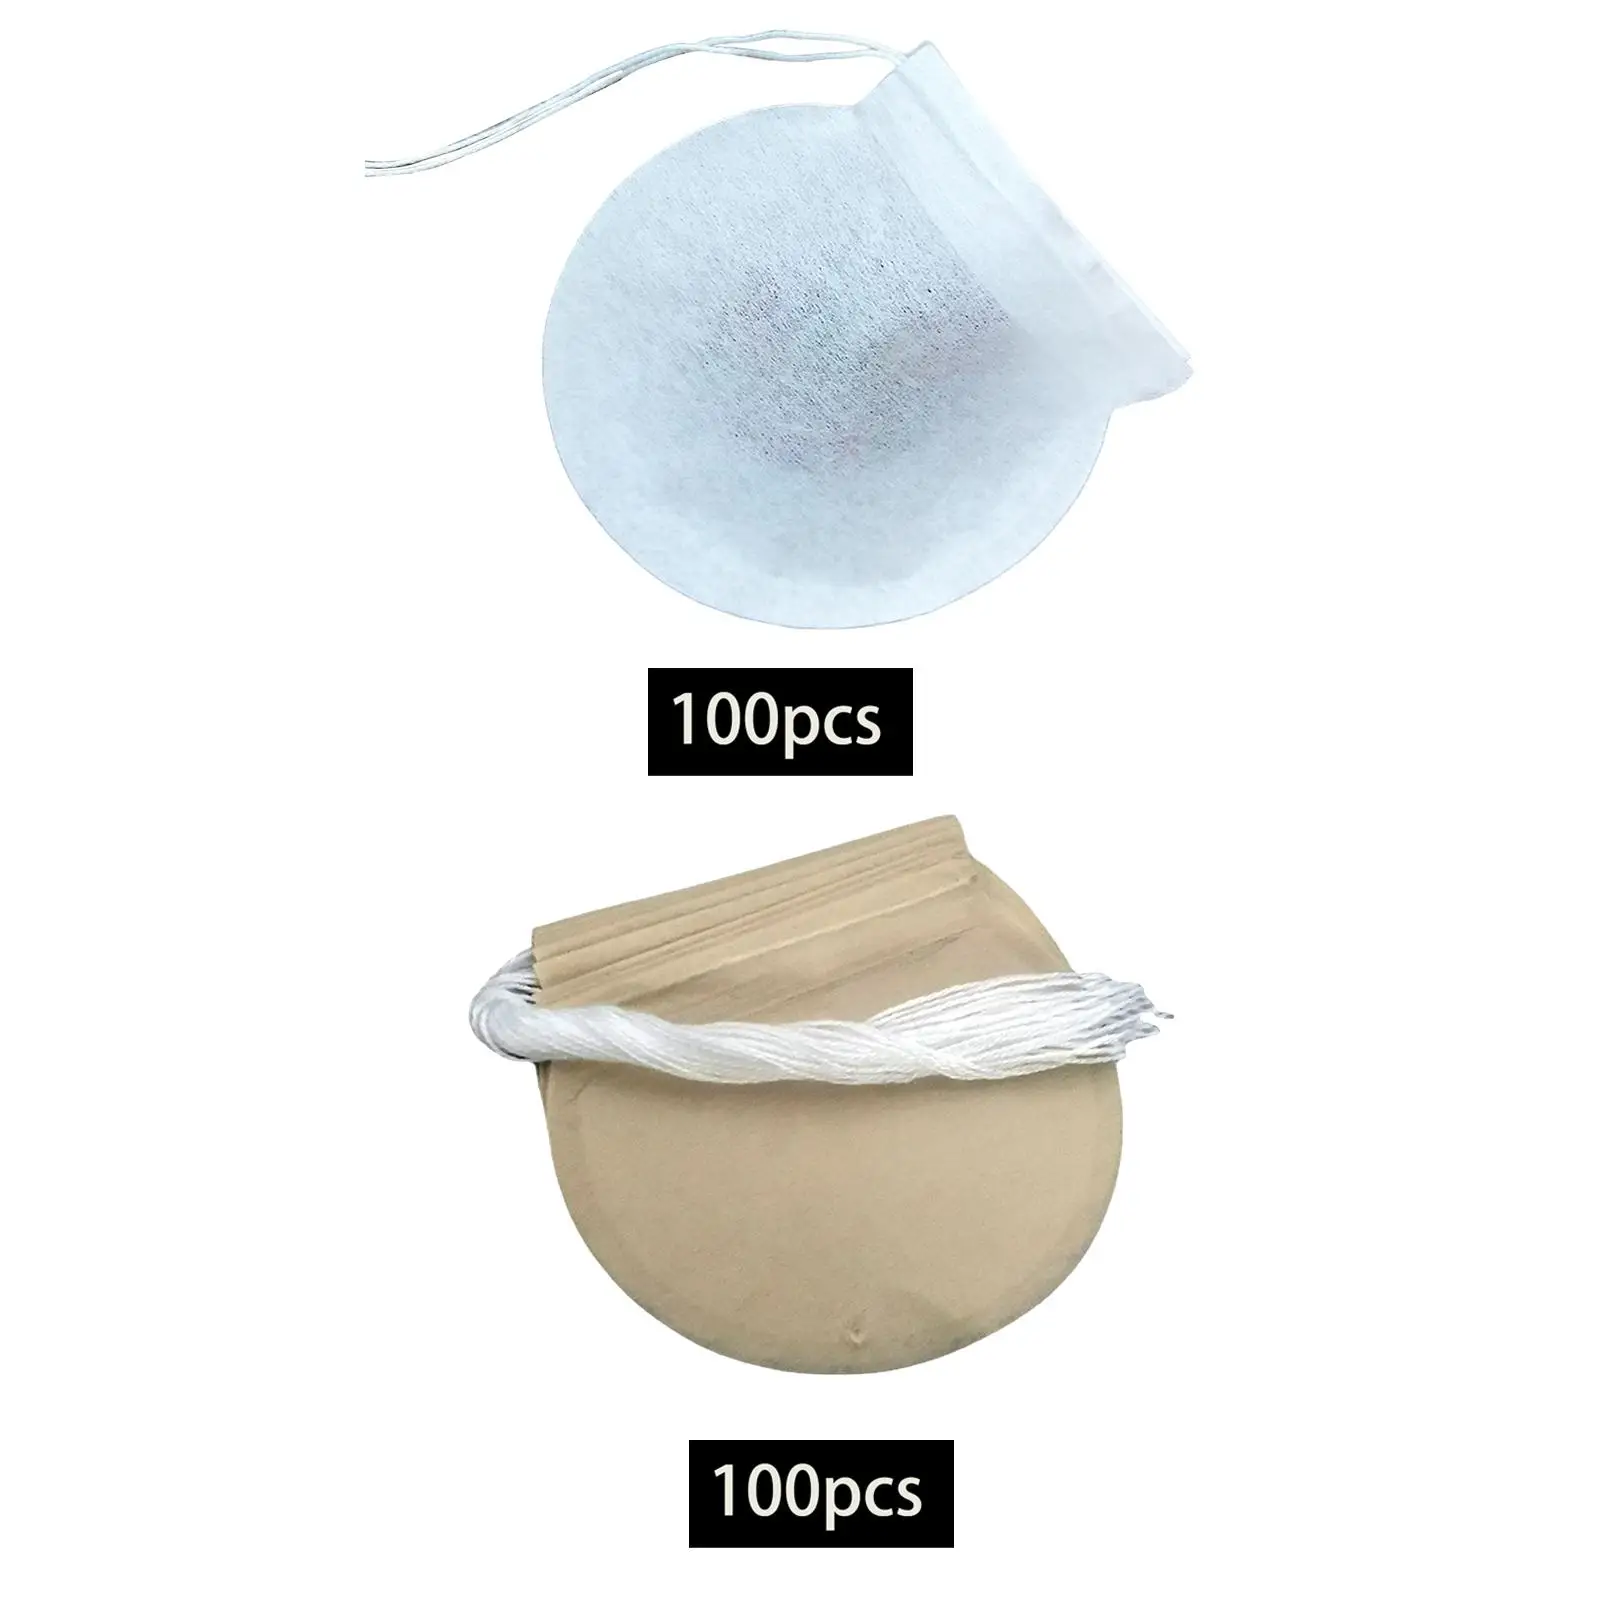 100Pcs Tea Filter Bags Pepper Spices Tea Infuser Foot Bath Package Drawstring